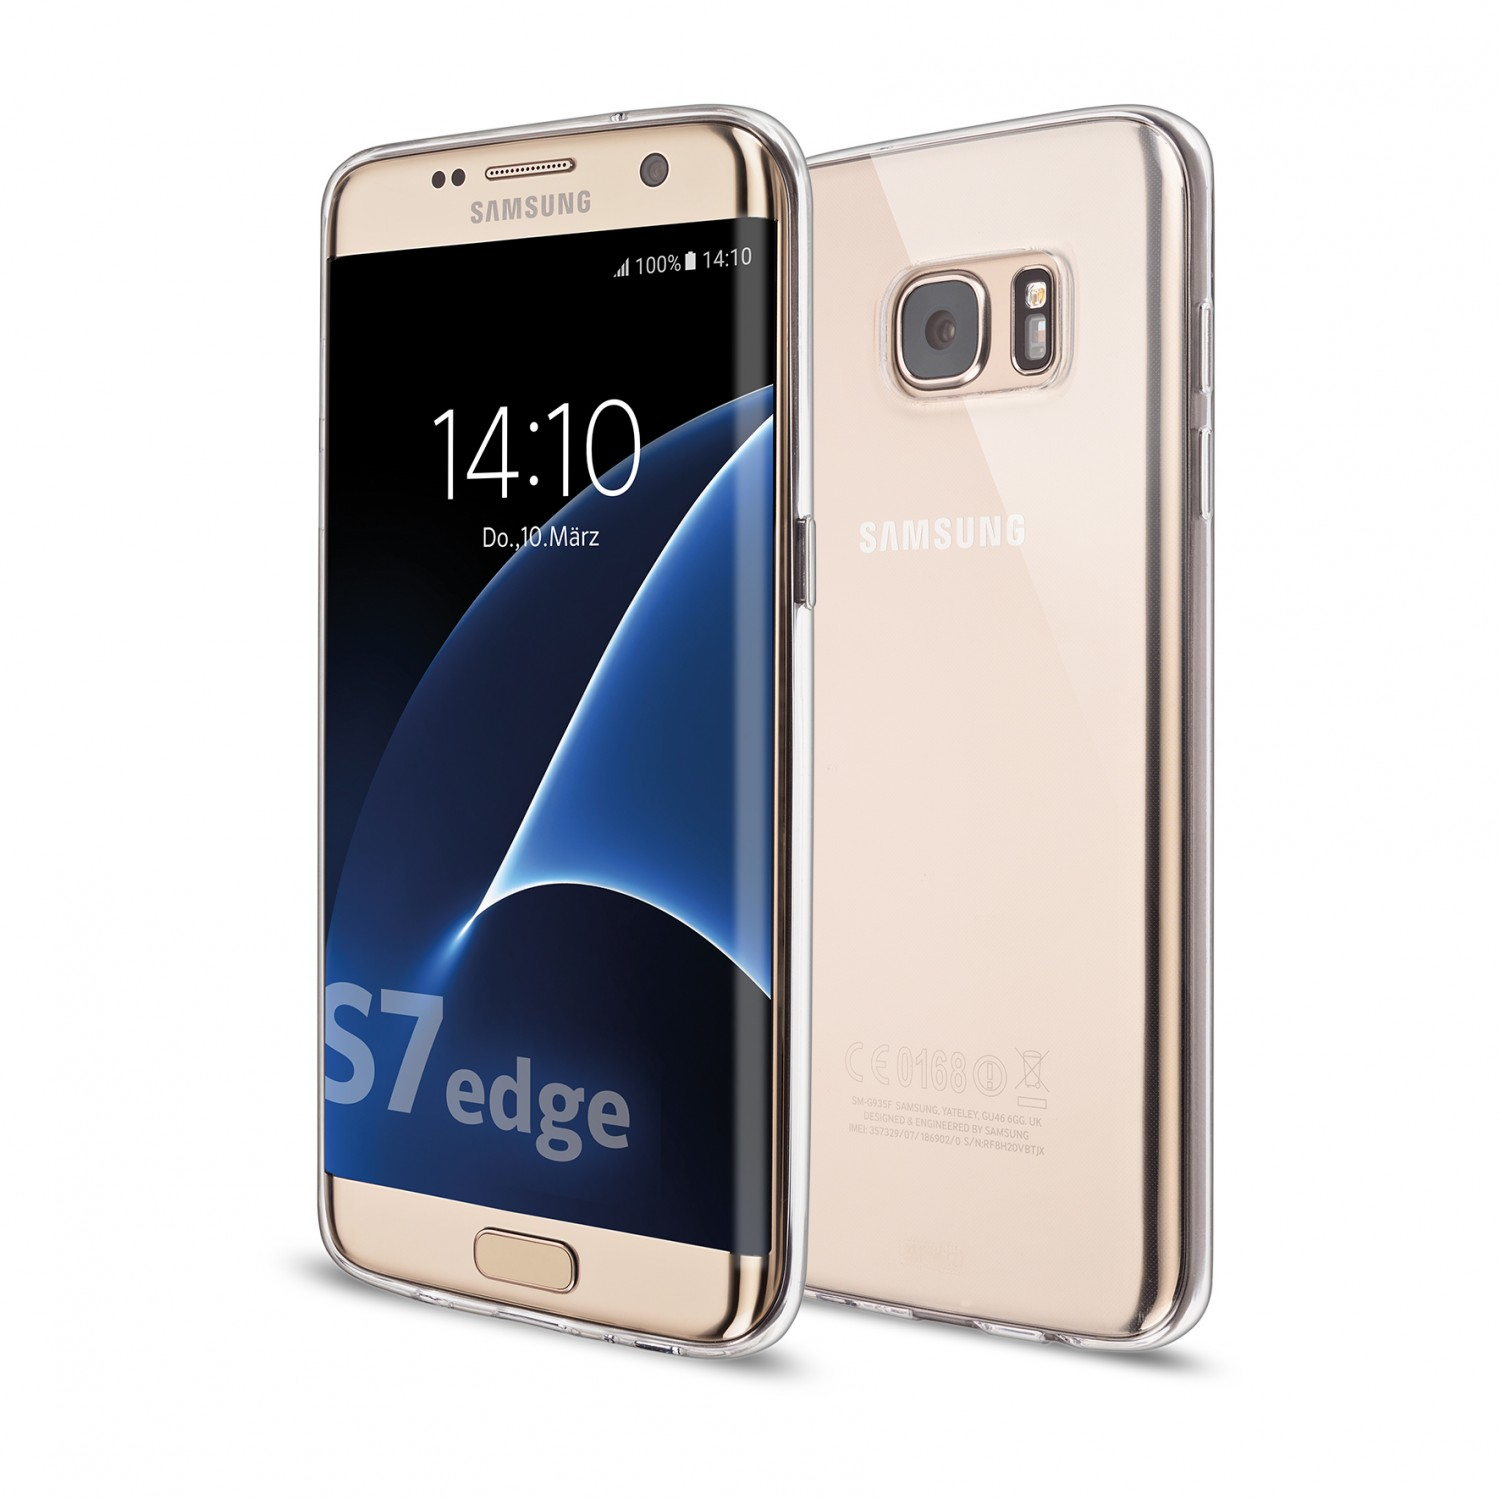 Backcover, edge, S7 Galaxy Samsung, NoCase, ARTWIZZ Transparent